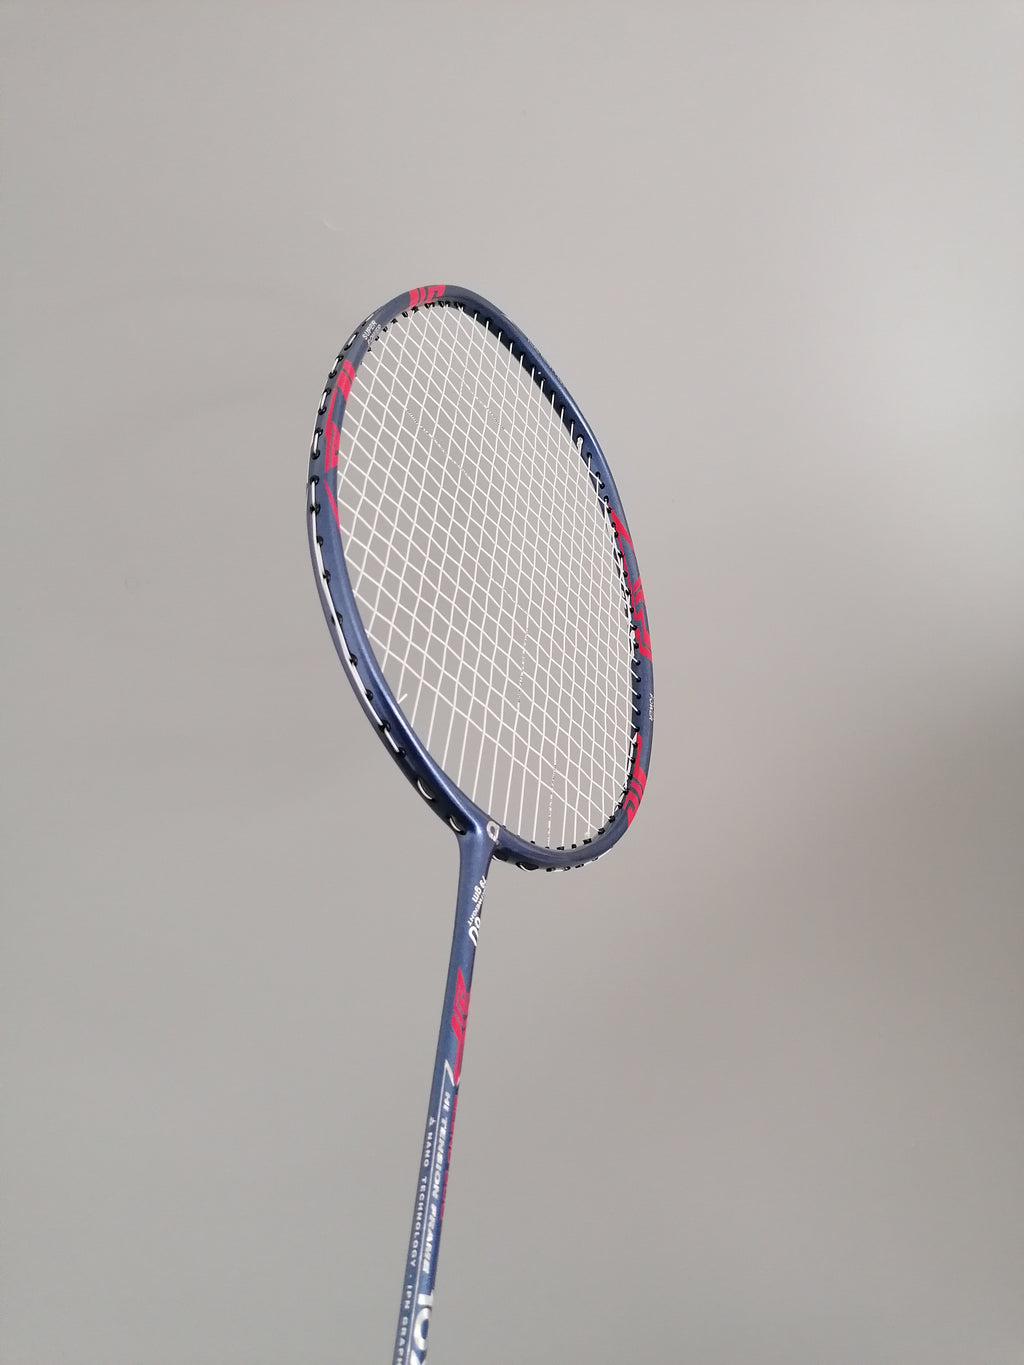 Apacs Blend Duo 10x 6u Lightweight Badminton Racket badminton racket review